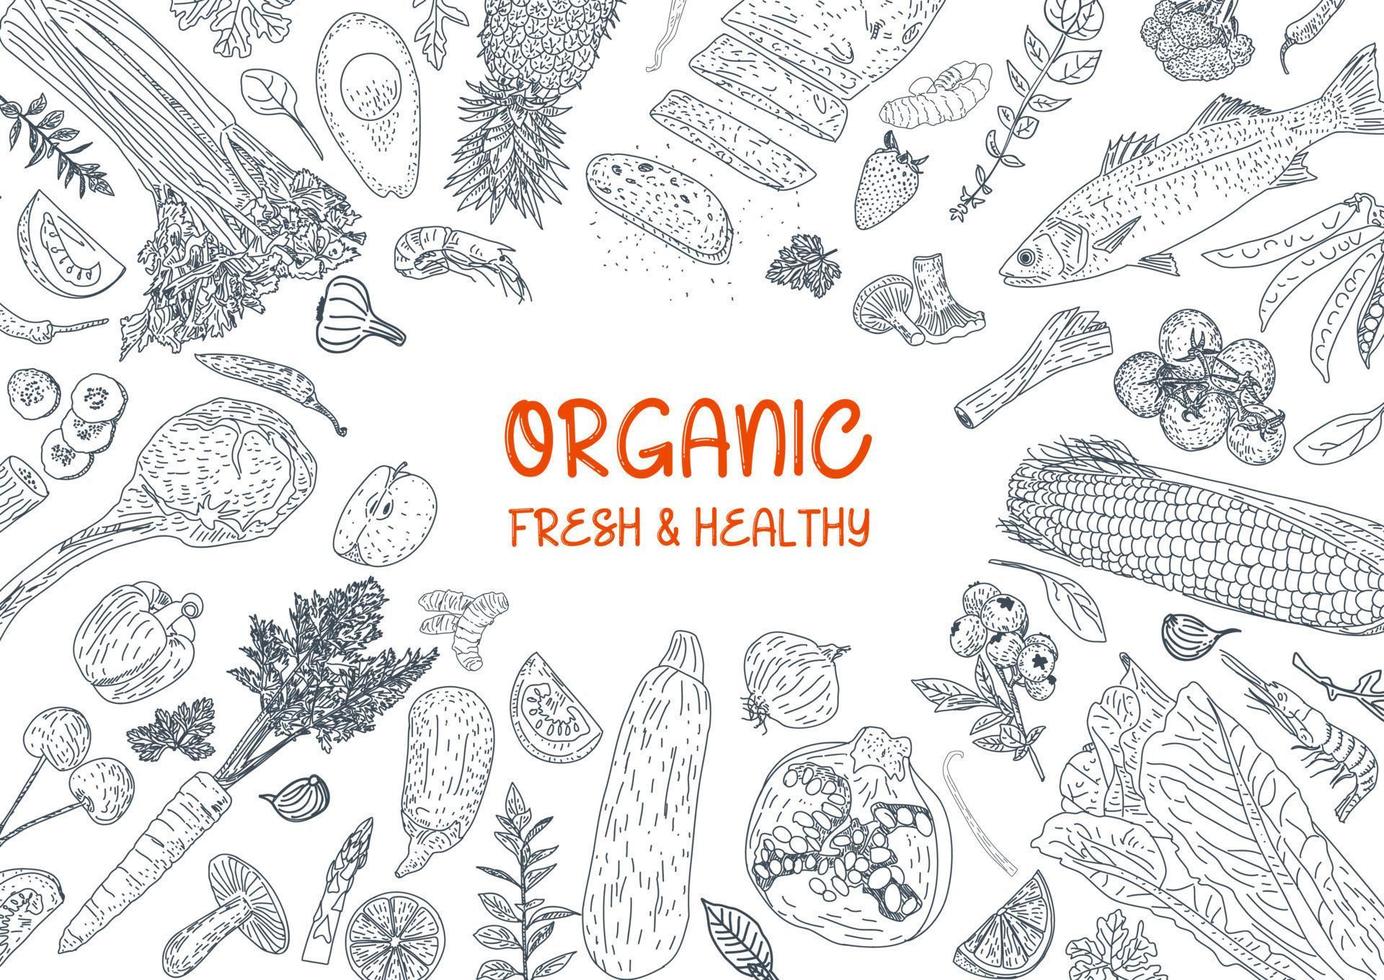 Healthy eating. Organic food illustration. vector